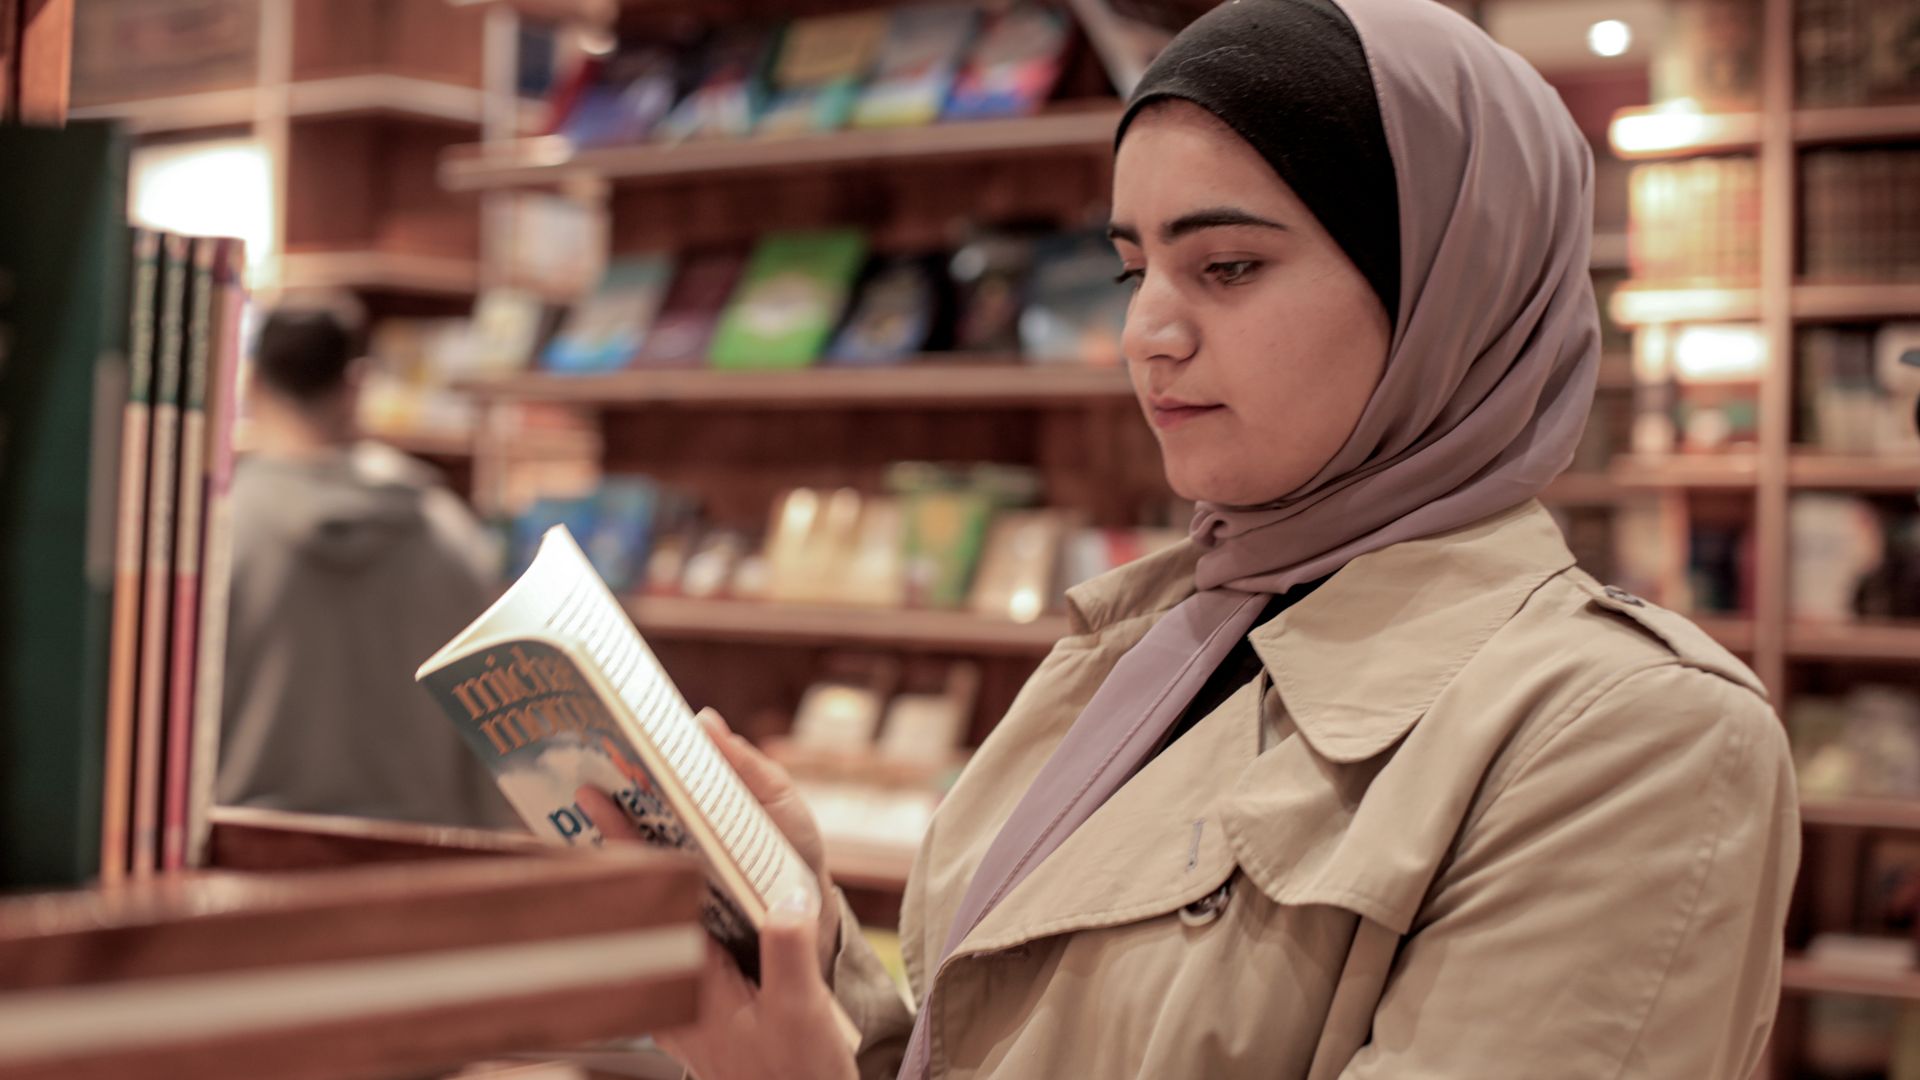 A young woman reads through a book